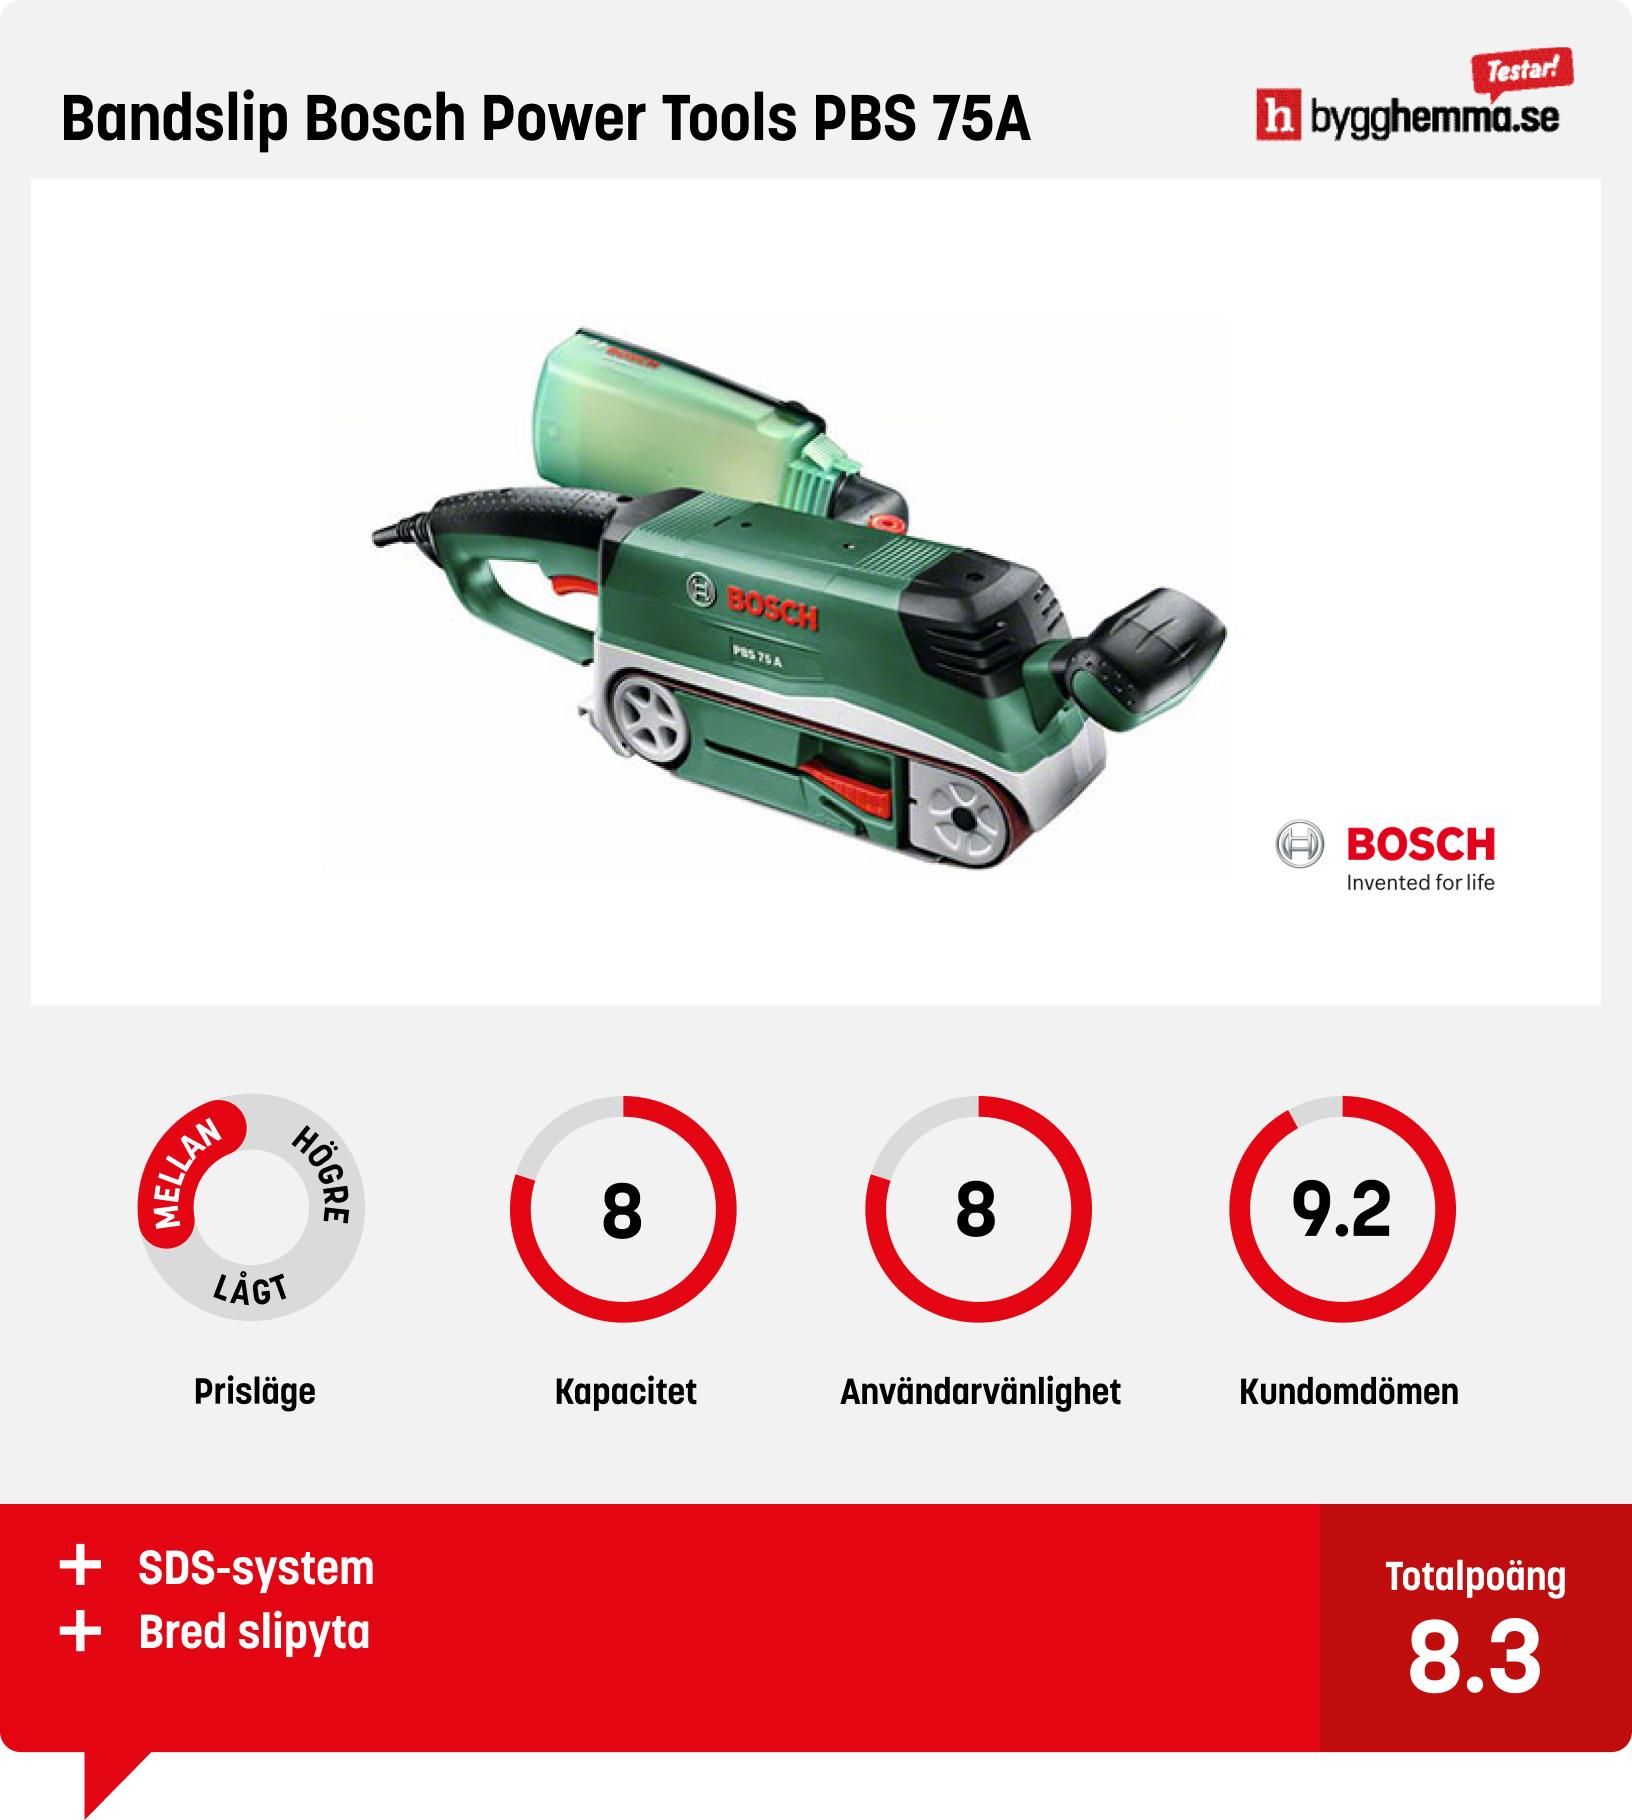 Bandslip bäst i test - Bandslip Bosch Power Tools PBS 75A